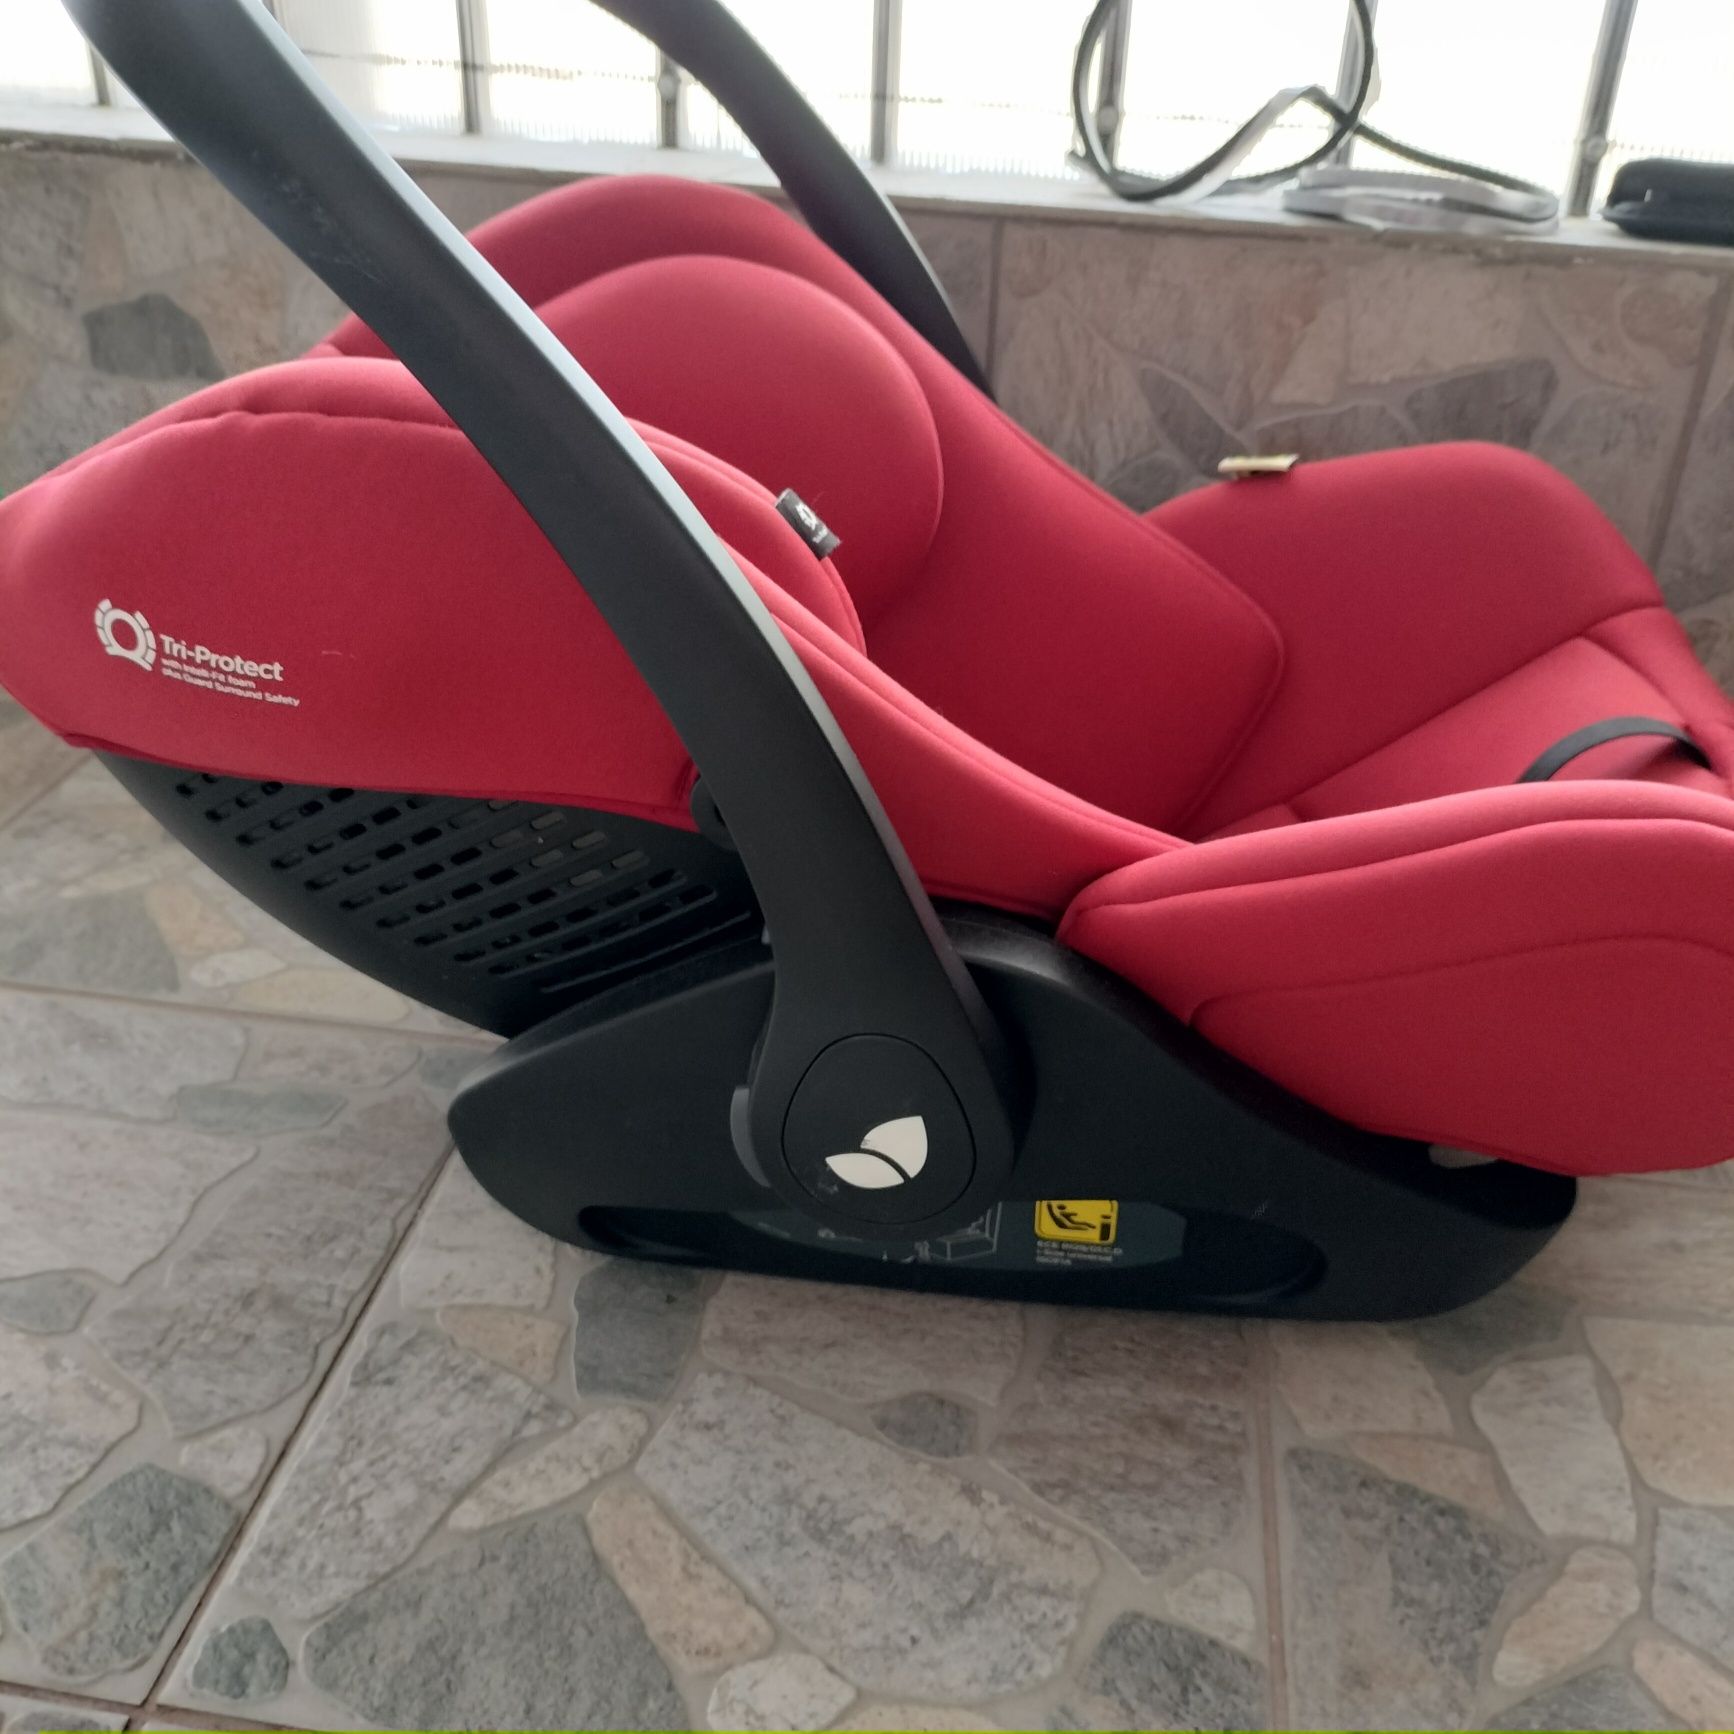 Vand scaun pentru bebe auto